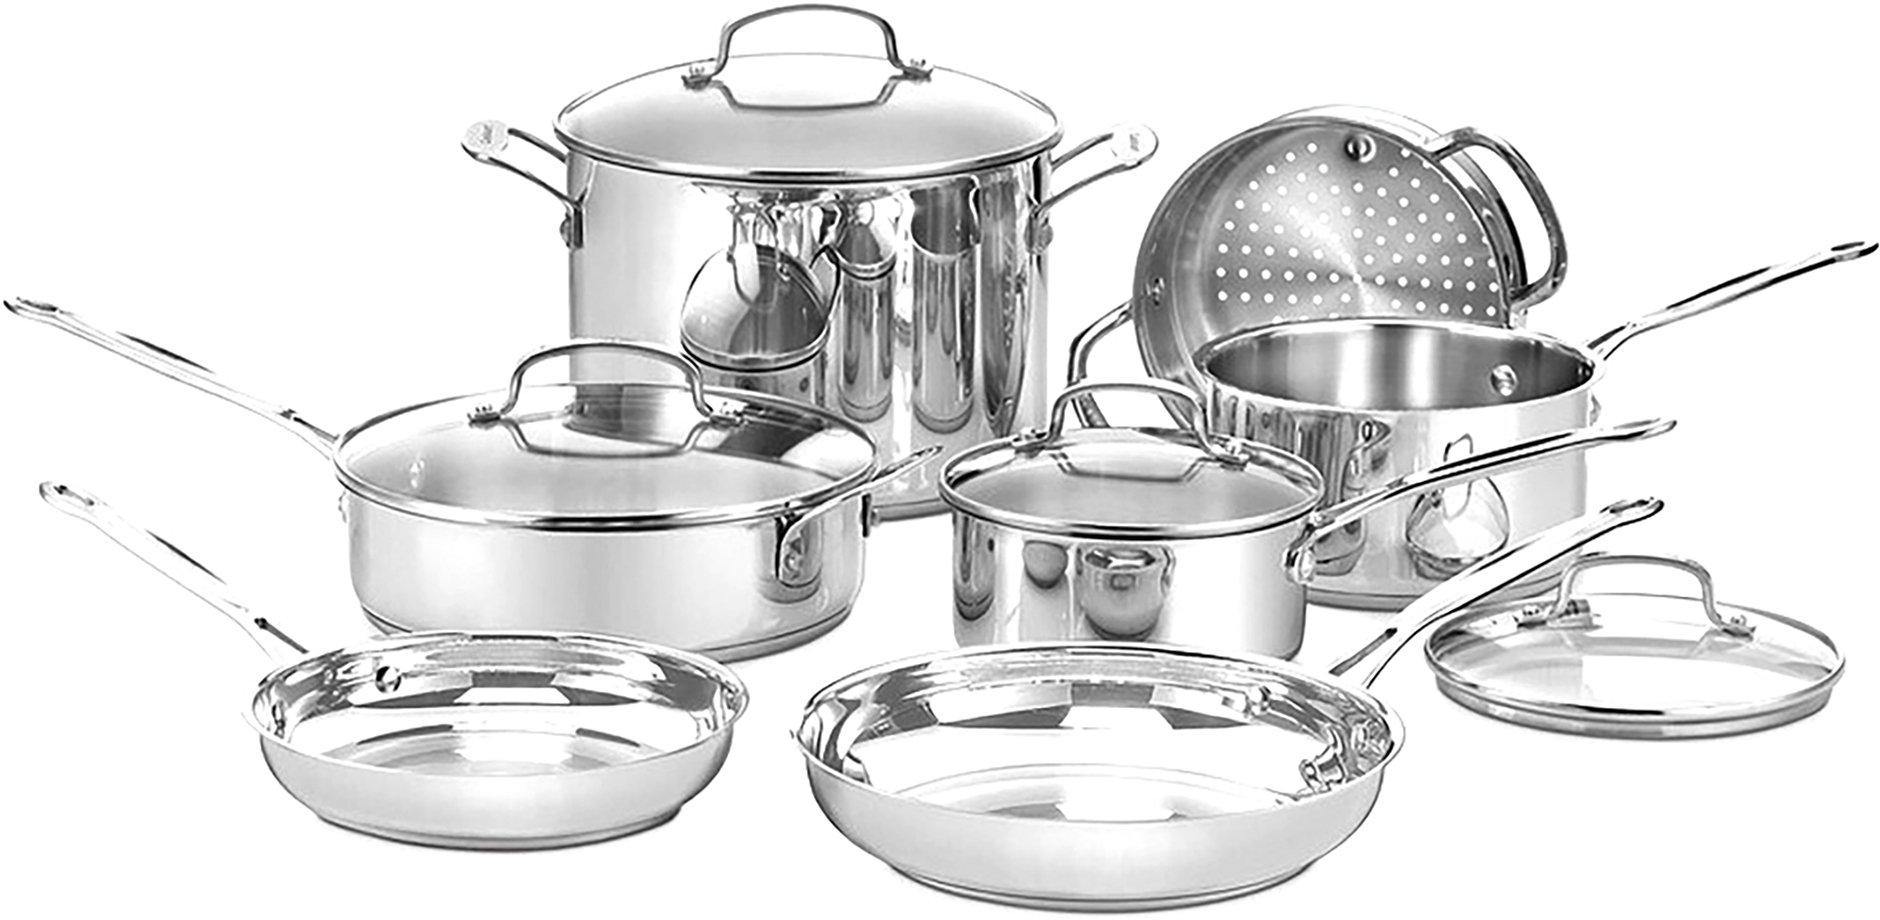 https://images.beallsflorida.com/i/beallsflorida/651-5830-2833-00-yyy/*11-pc.-Chef-s-Classic-Cookware-Set*?$product$&fmt=auto&qlt=default